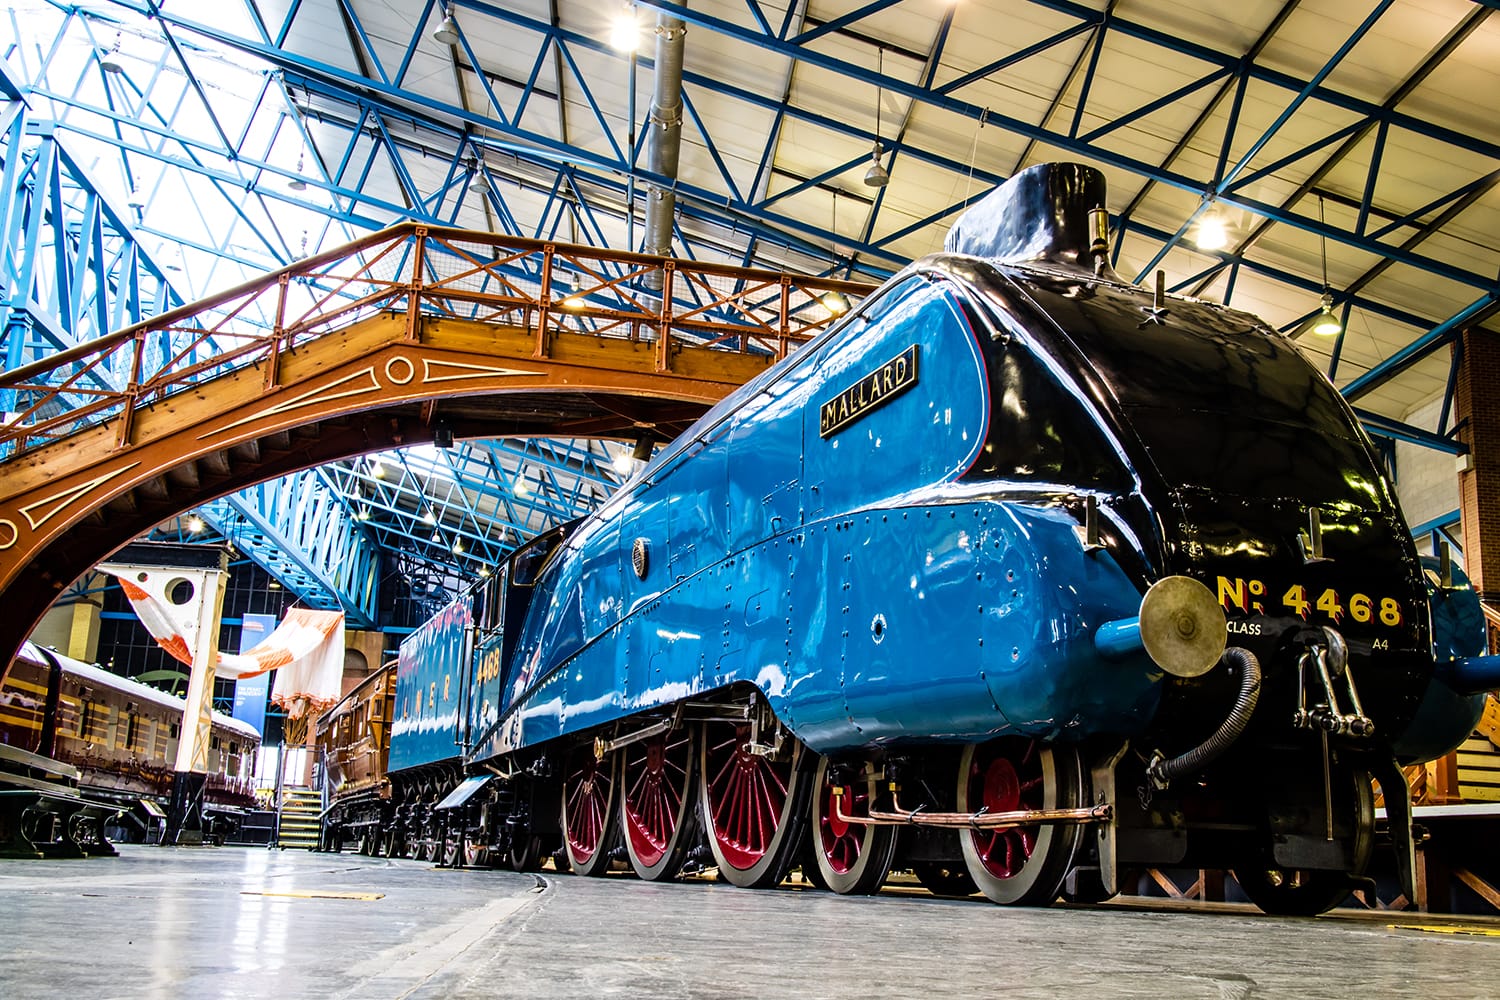 A4 Steam Locomotive world record holder Mallard at the National Railway Museum in York, UK